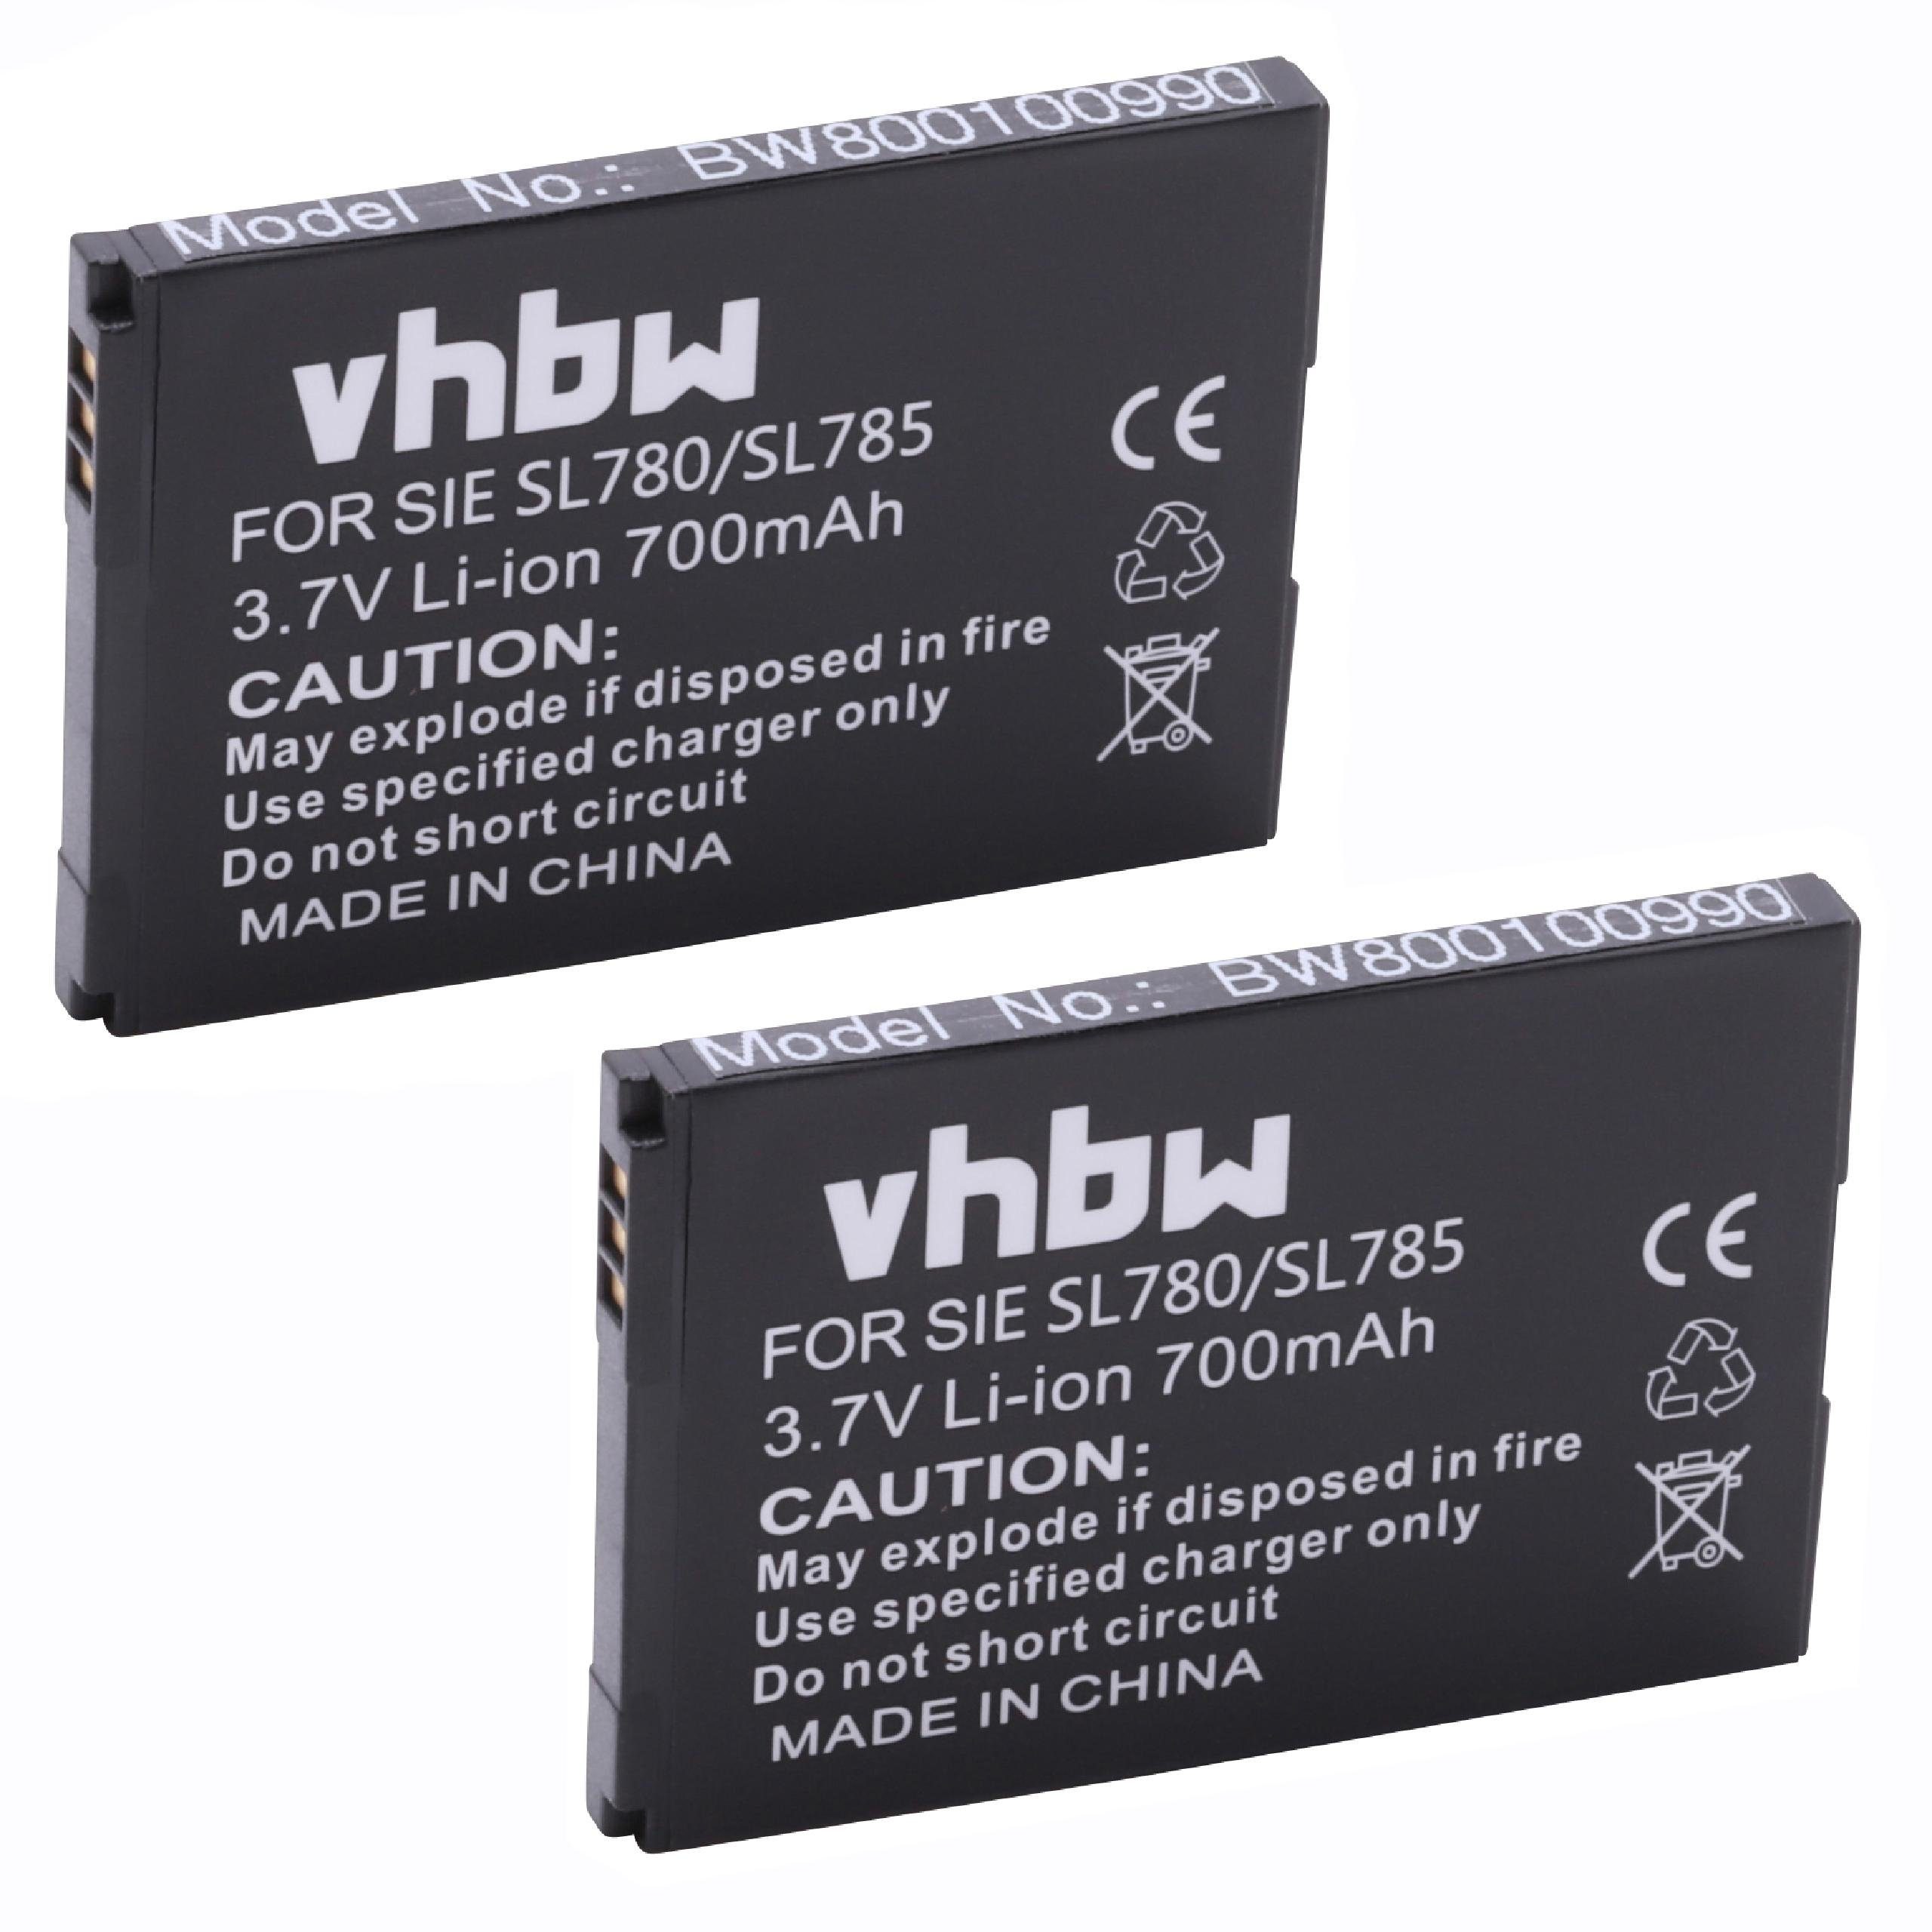 vhbw kompatibel mit Bintec-Elmeg D141 DECT Akku Li-Ion 700 mAh (3,7 V)